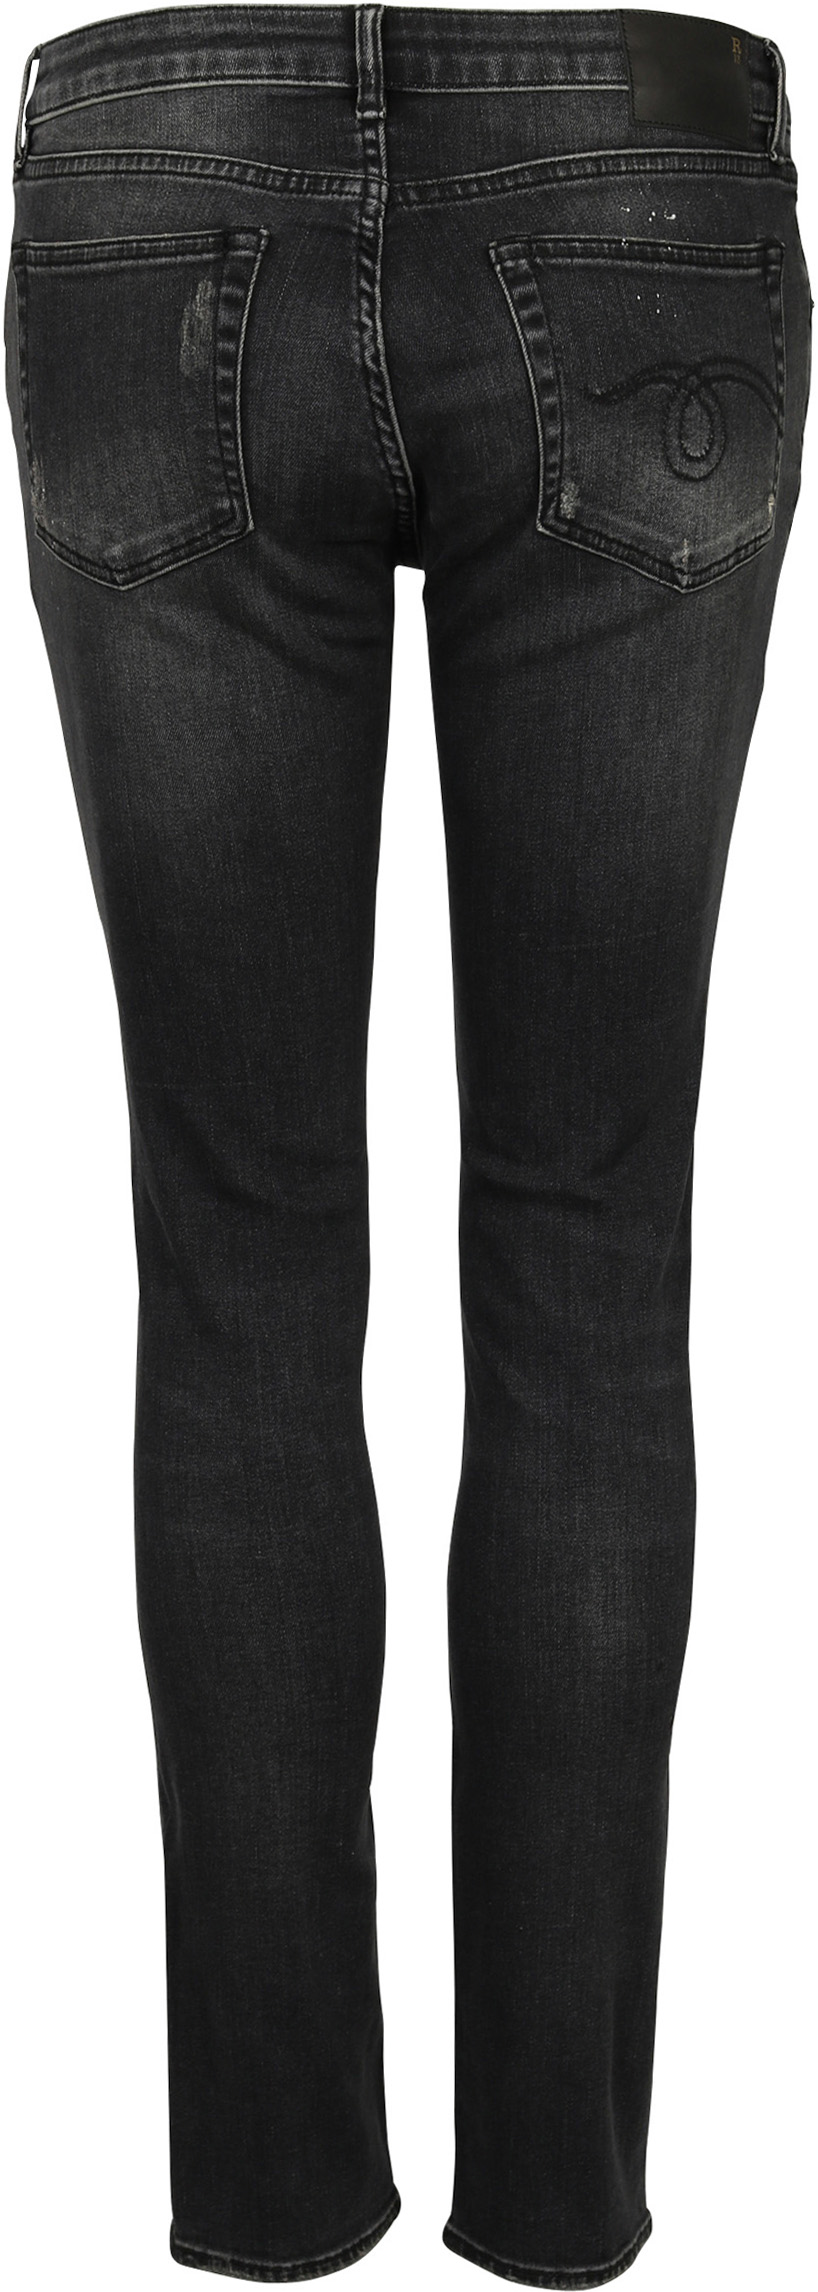 R13 Jeans Kate Skinny Orion Black Wash 29